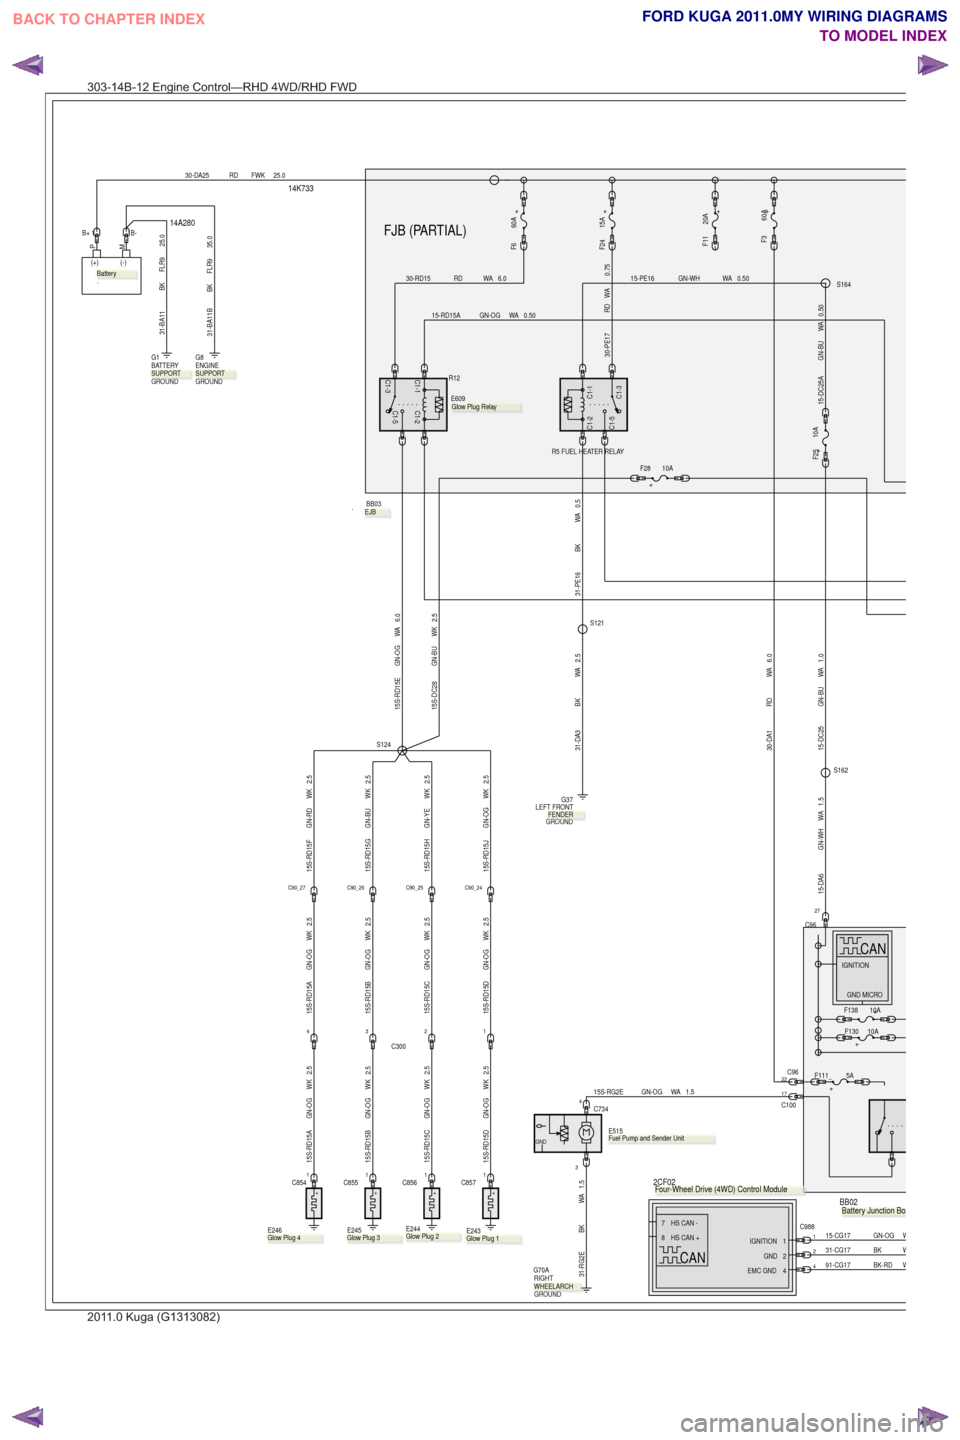 FORD KUGA 2011 1.G Wiring Diagram Workshop Manual 14K733
14A280FJB (PARTIAL)
BB03
.
+
F6 60APM
(+) (-)
.
30-DA25 RD FWK 25.0
2.5WK
GN-OG
15S-RD15A2.5WK
GN-OG
15S-RD15B2.5WK
GN-OG
15S-RD15C2.5WK
GN-OG
15S-RD15D
+
.
E244
+
E246
.
1C8541C8561C857C8551
+